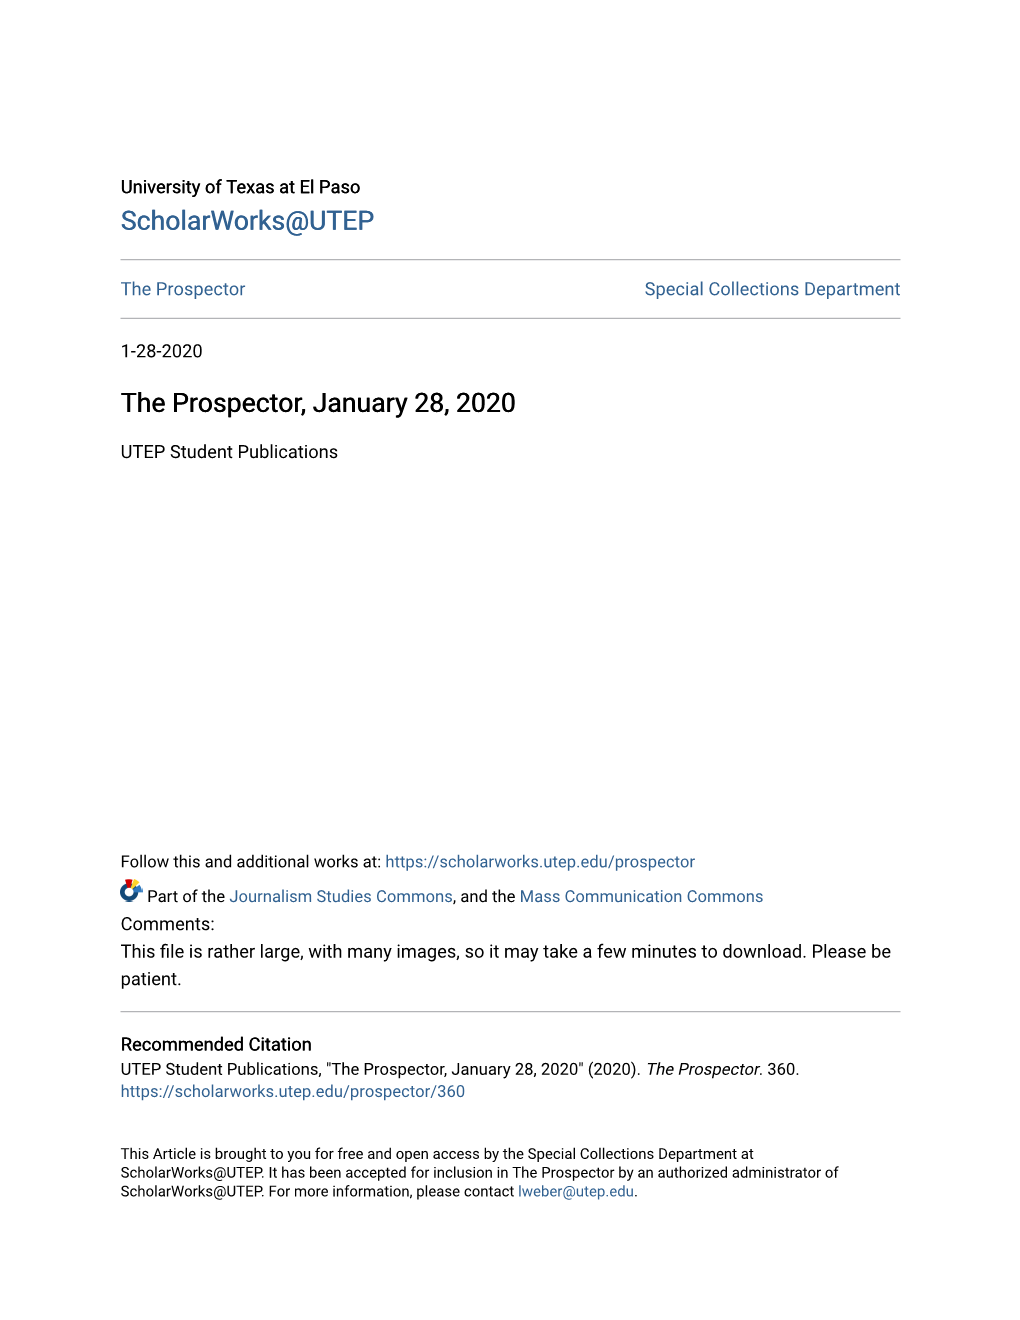 The Prospector, January 28, 2020